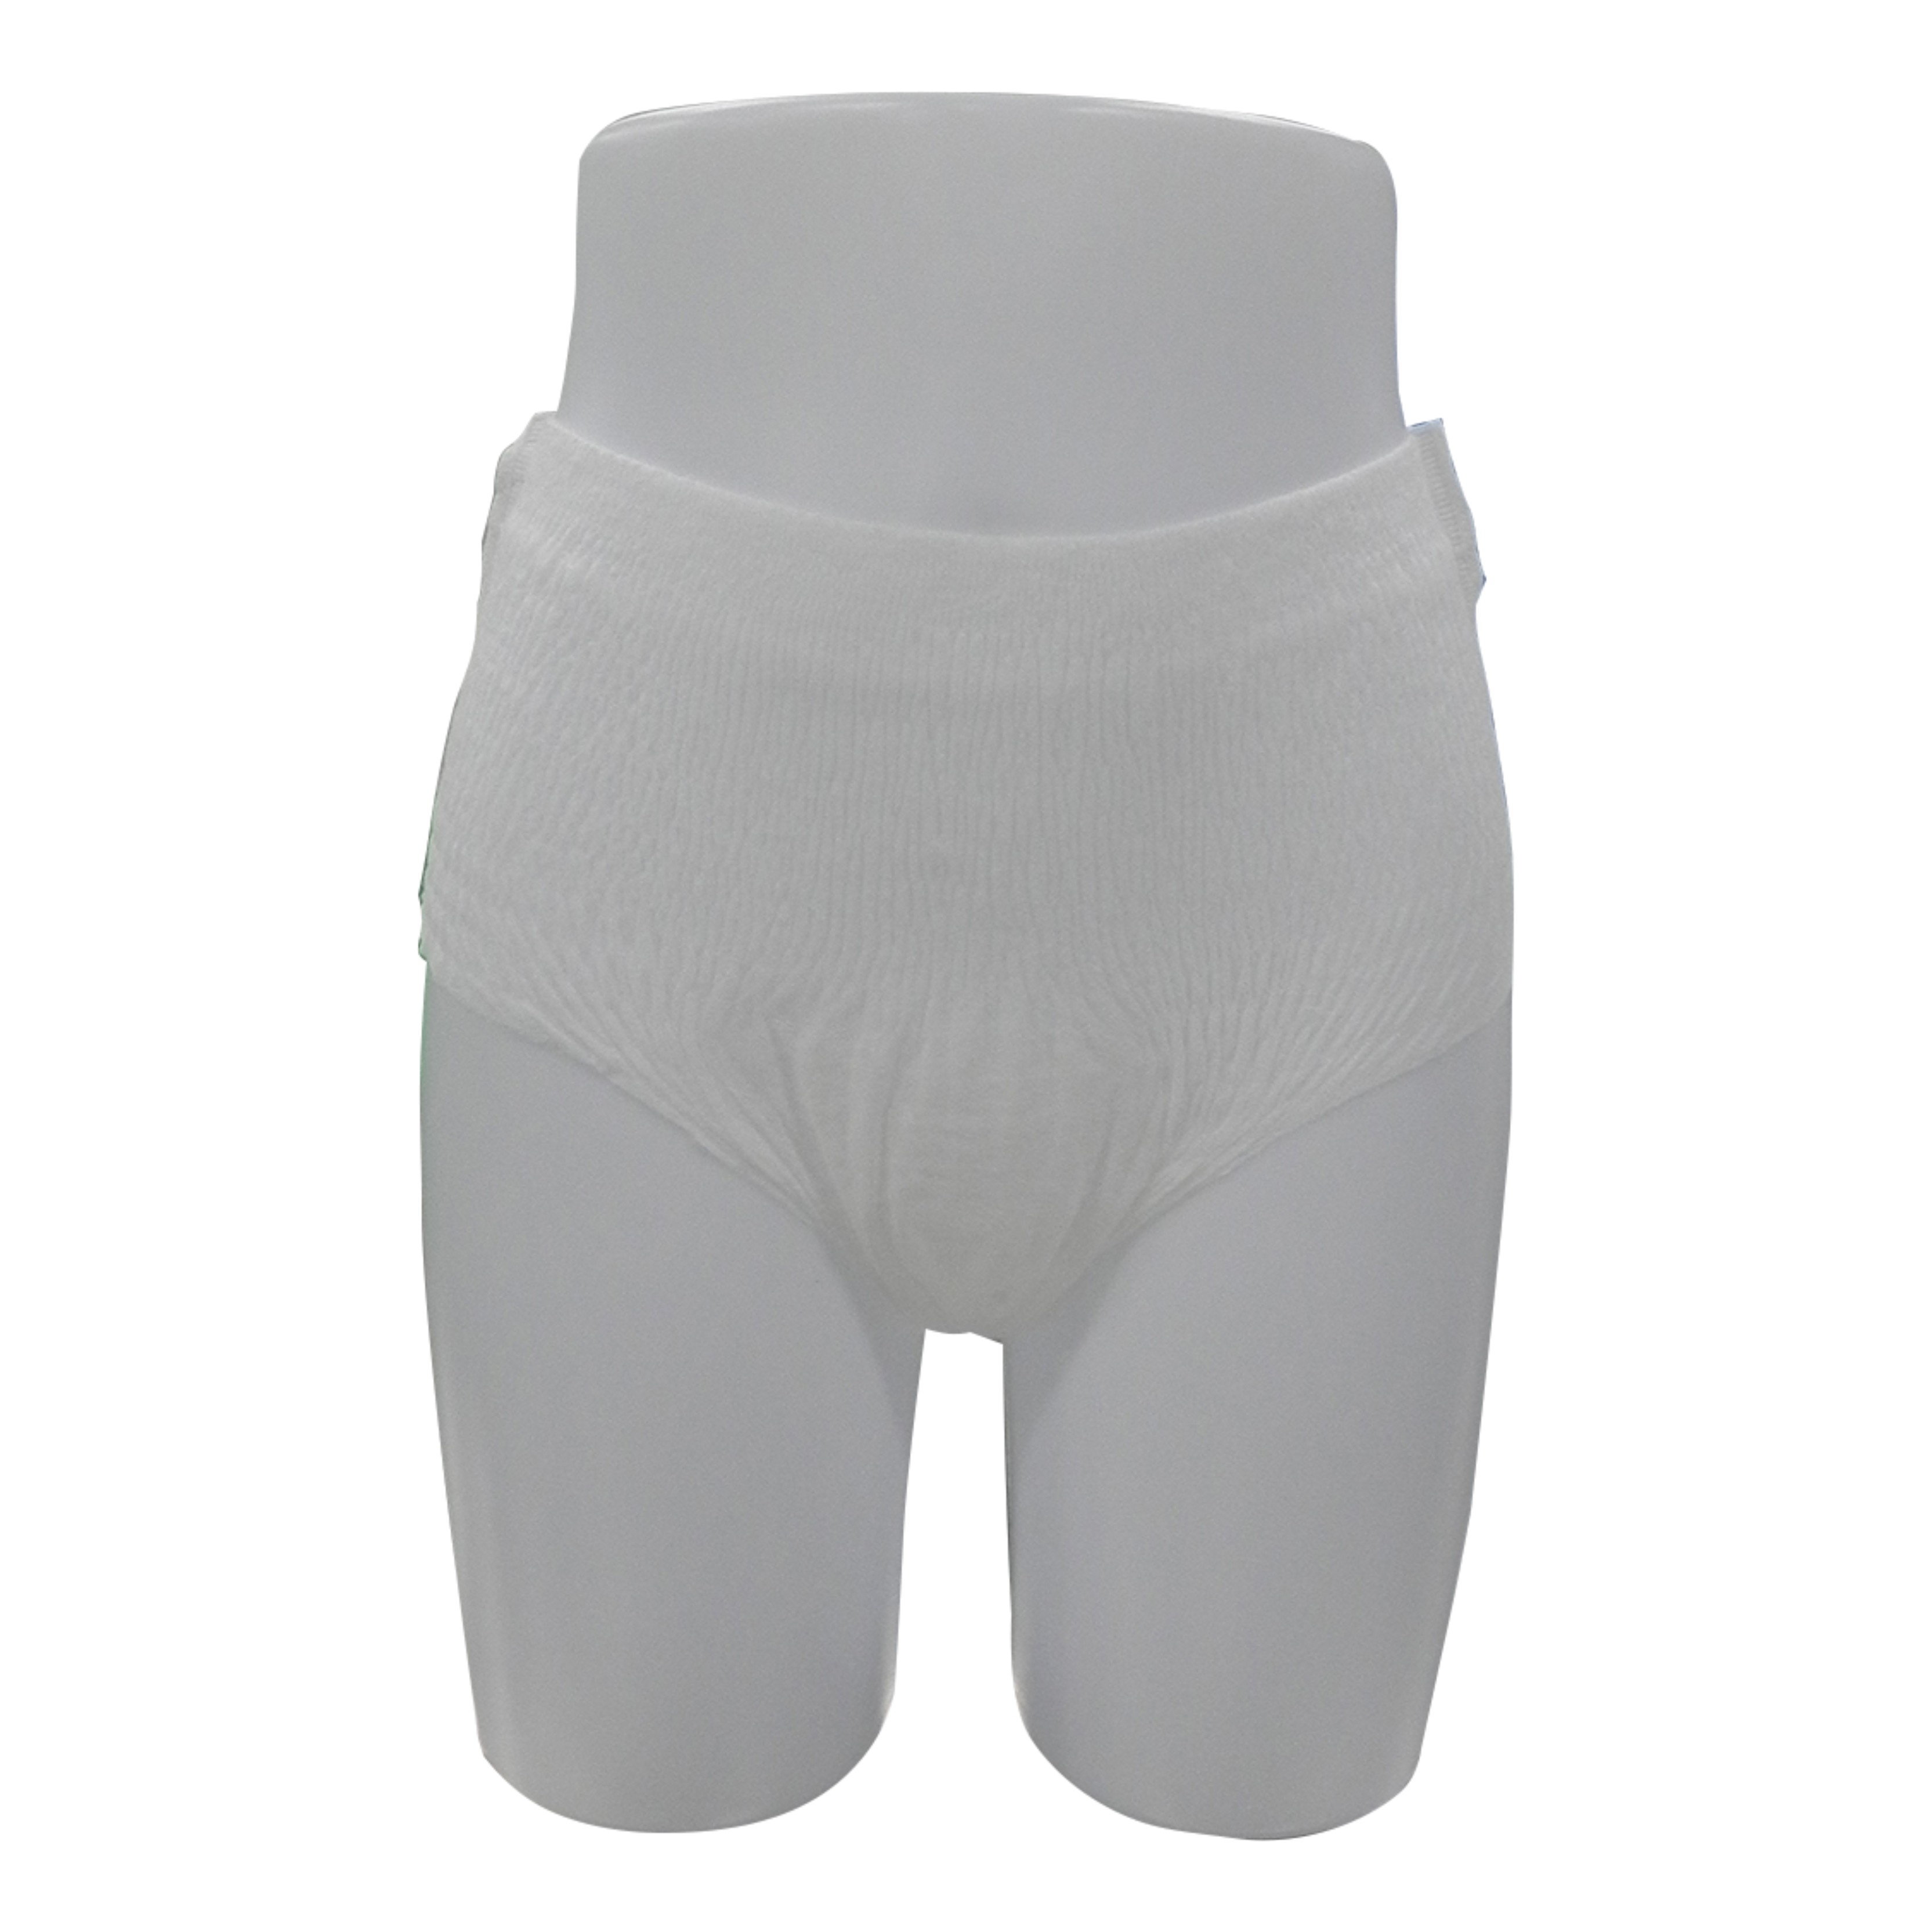 Hot sale Sanitary Briefs - super sleepy lady women sanitary napkins female period pants in pull up style – Yoho